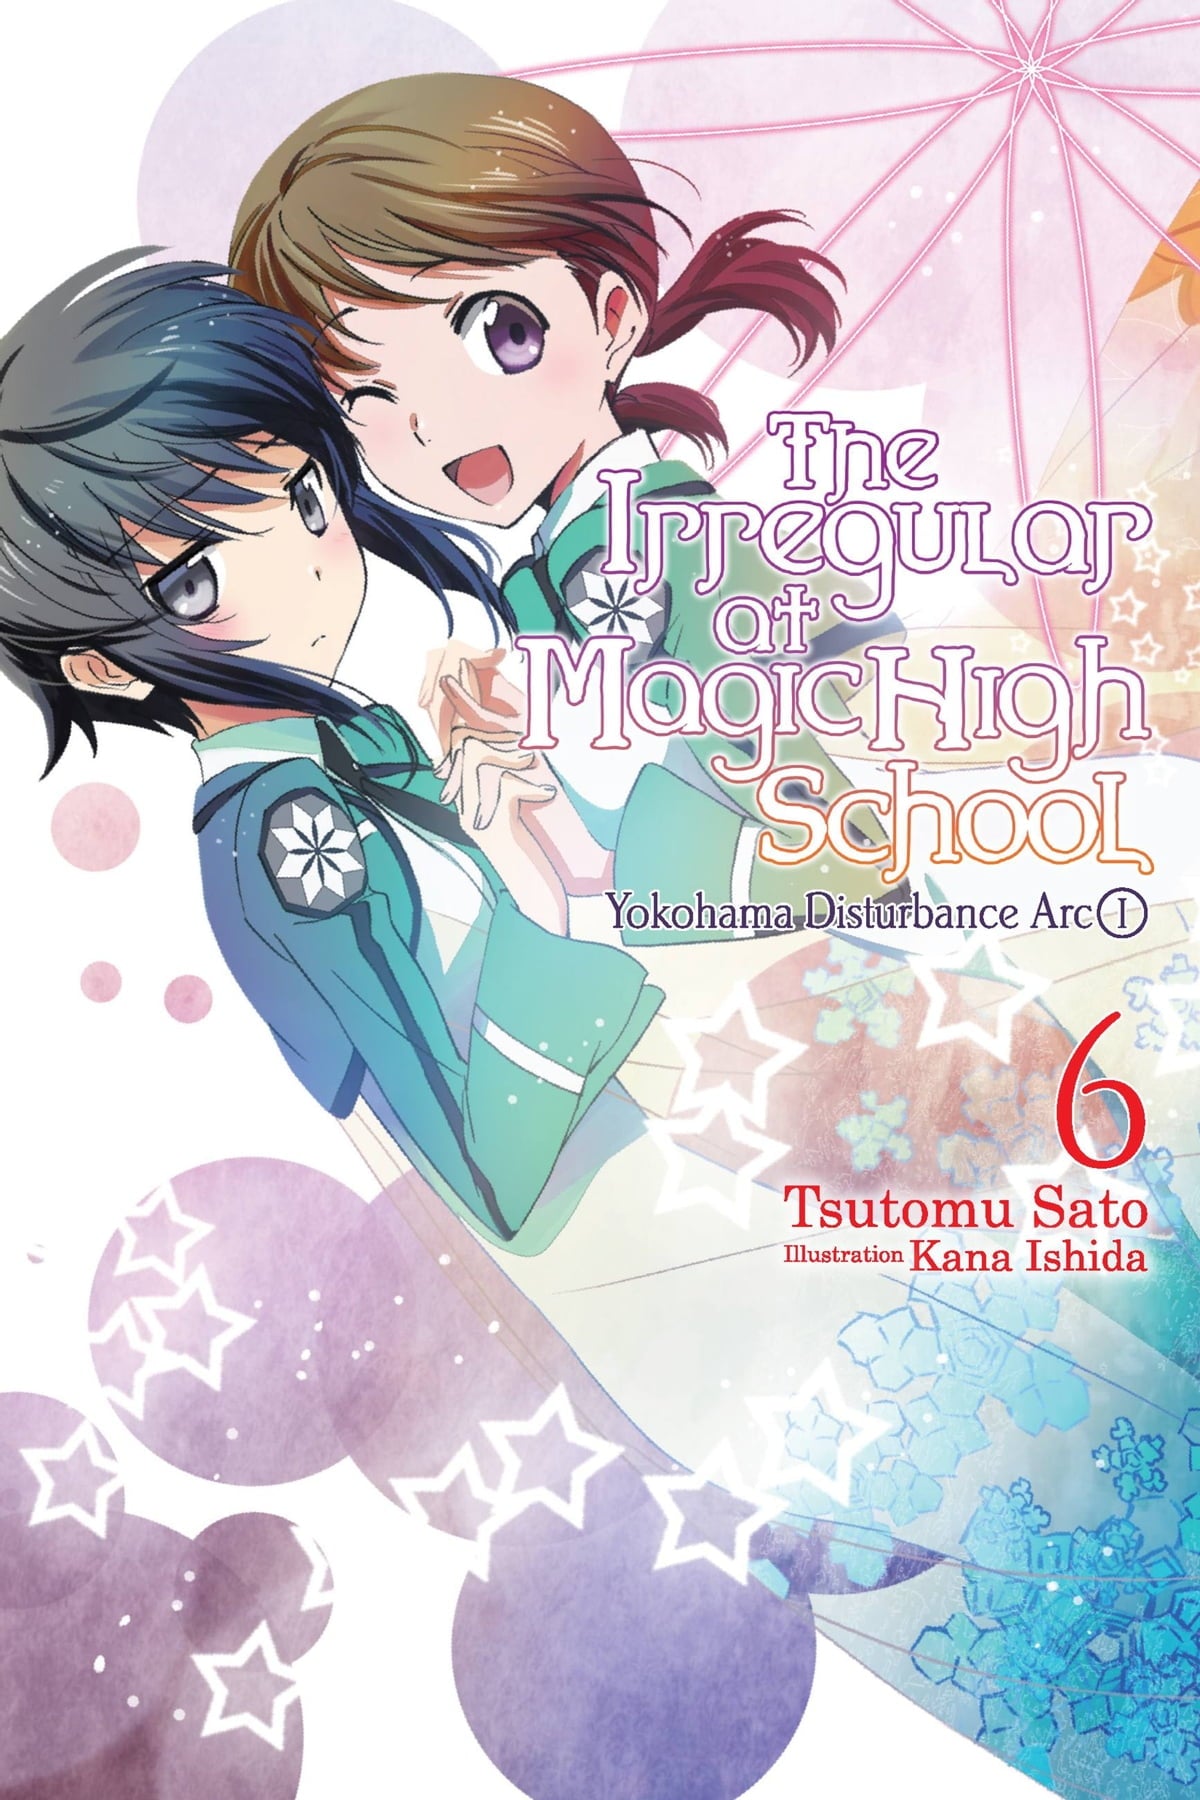 The Irregular at Magic High School Vol. 06 (Light Novel): Yokohama Disturbance Arc, Part I